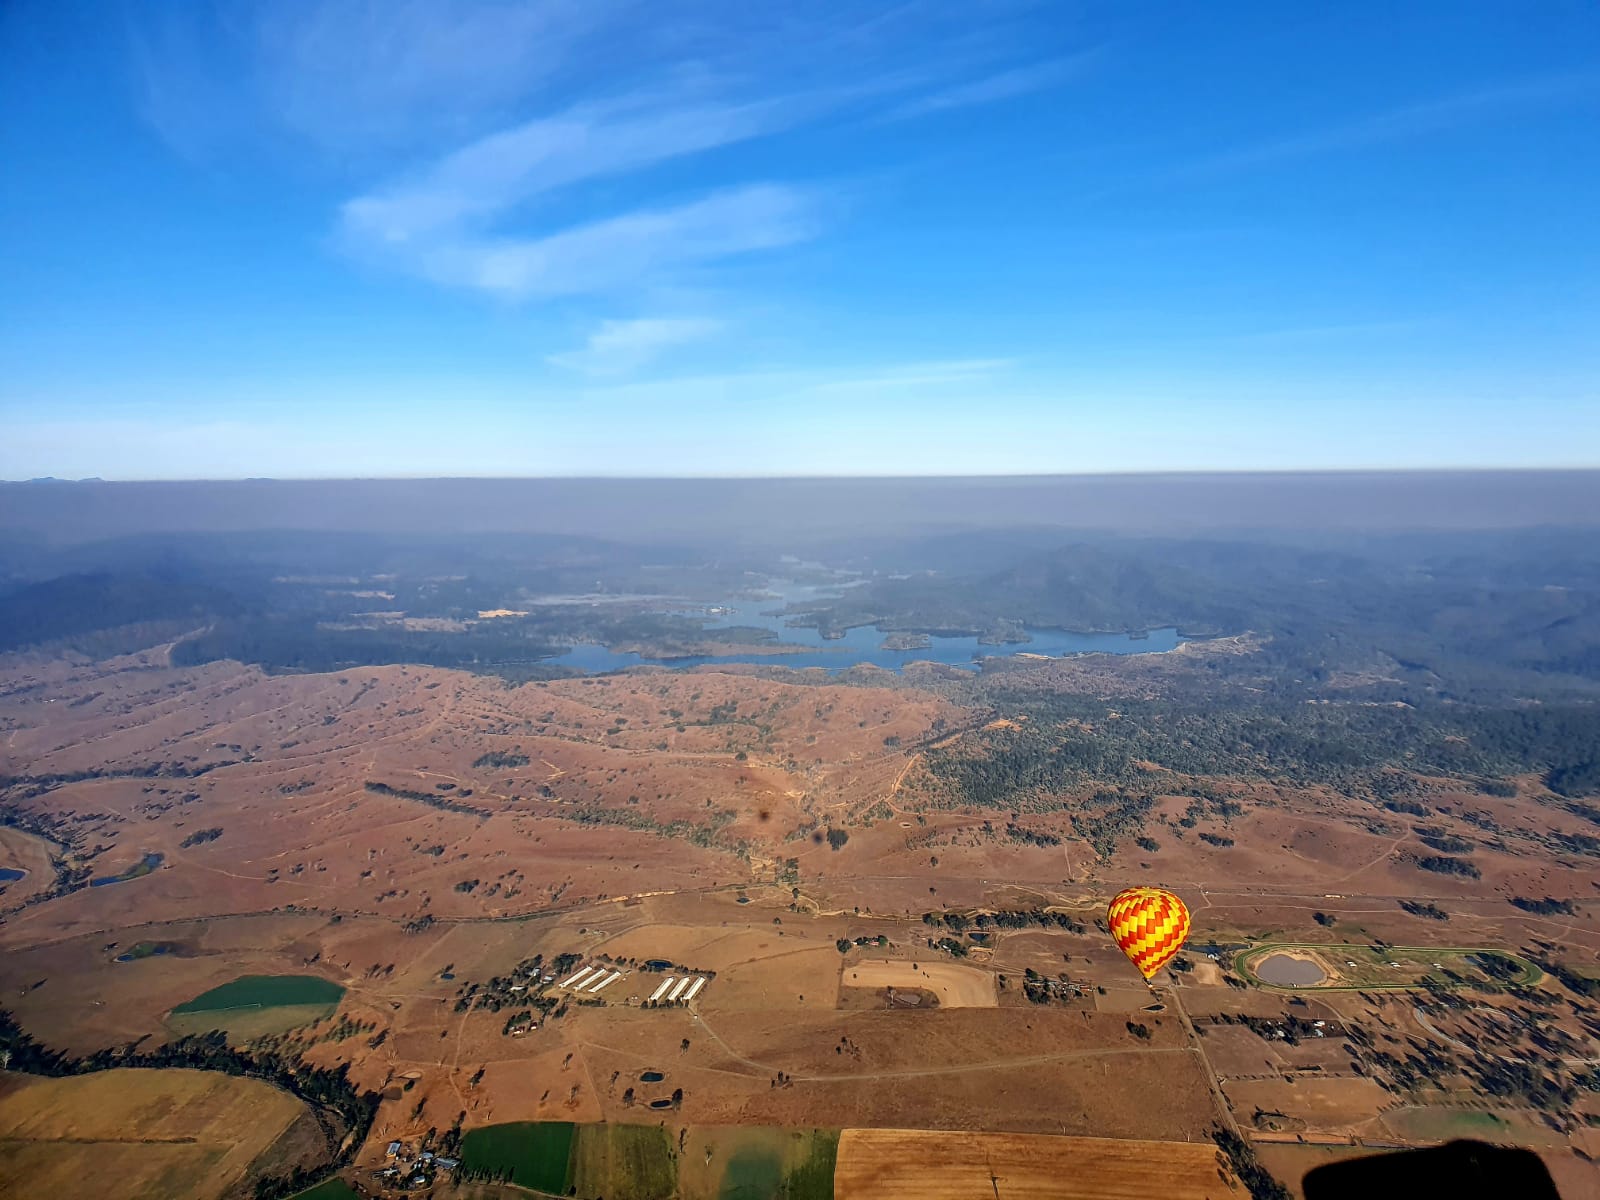 Wide open vistas from a hot air balloon basket.